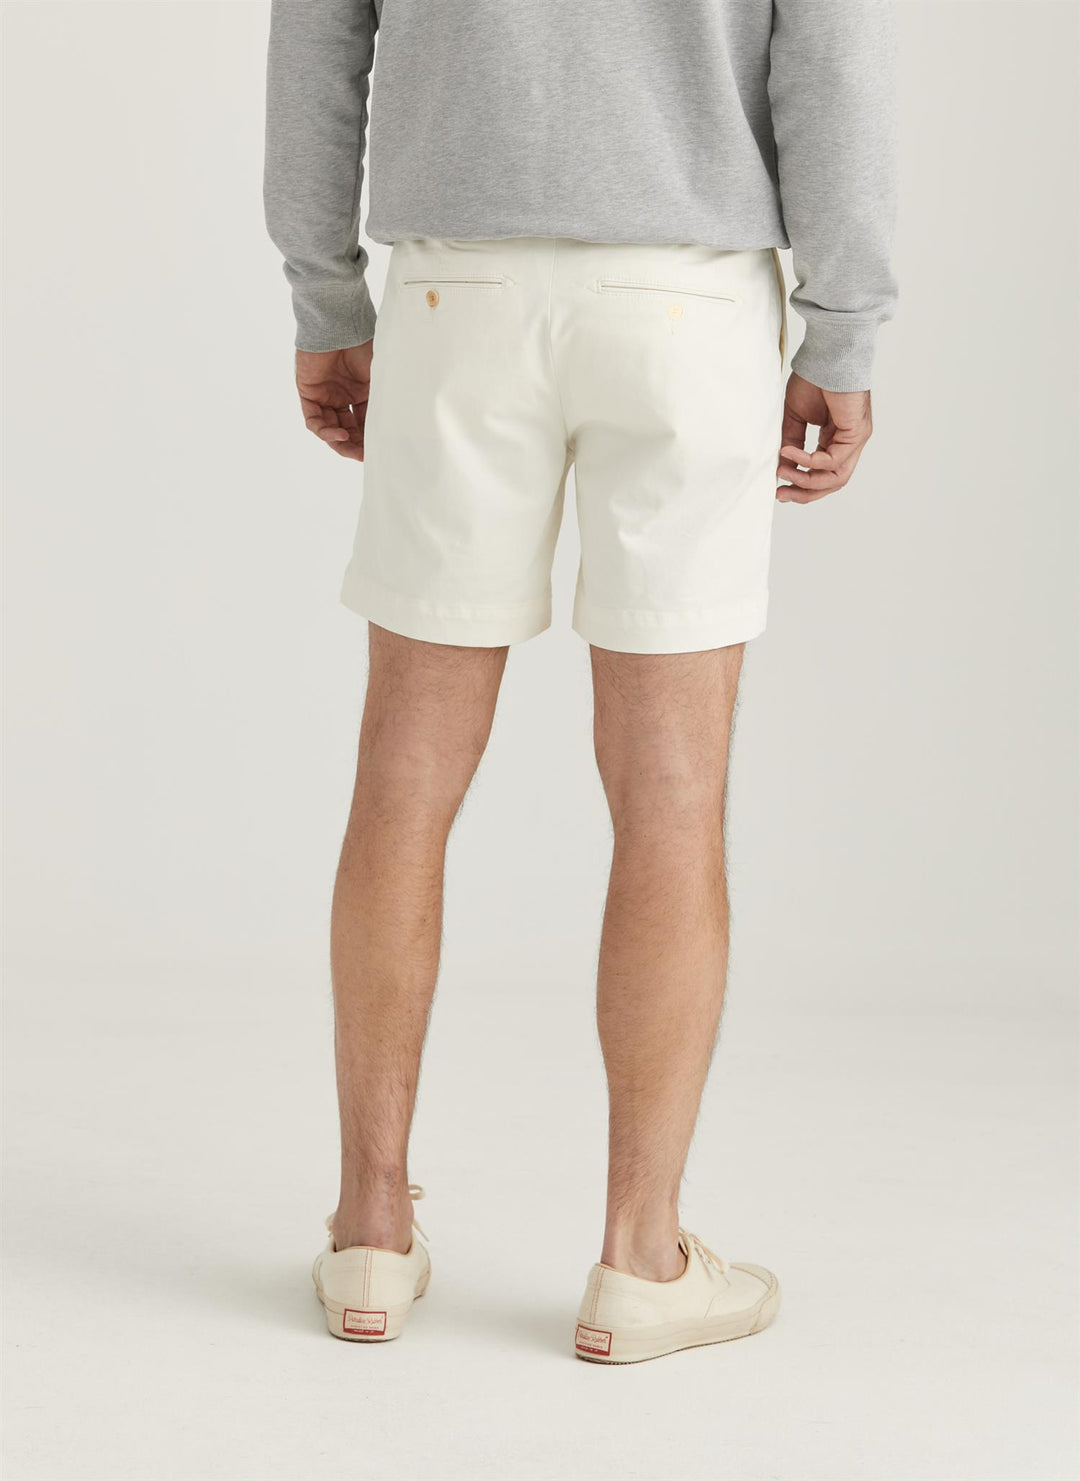 Jeffrey Short Chino Shorts Off-White